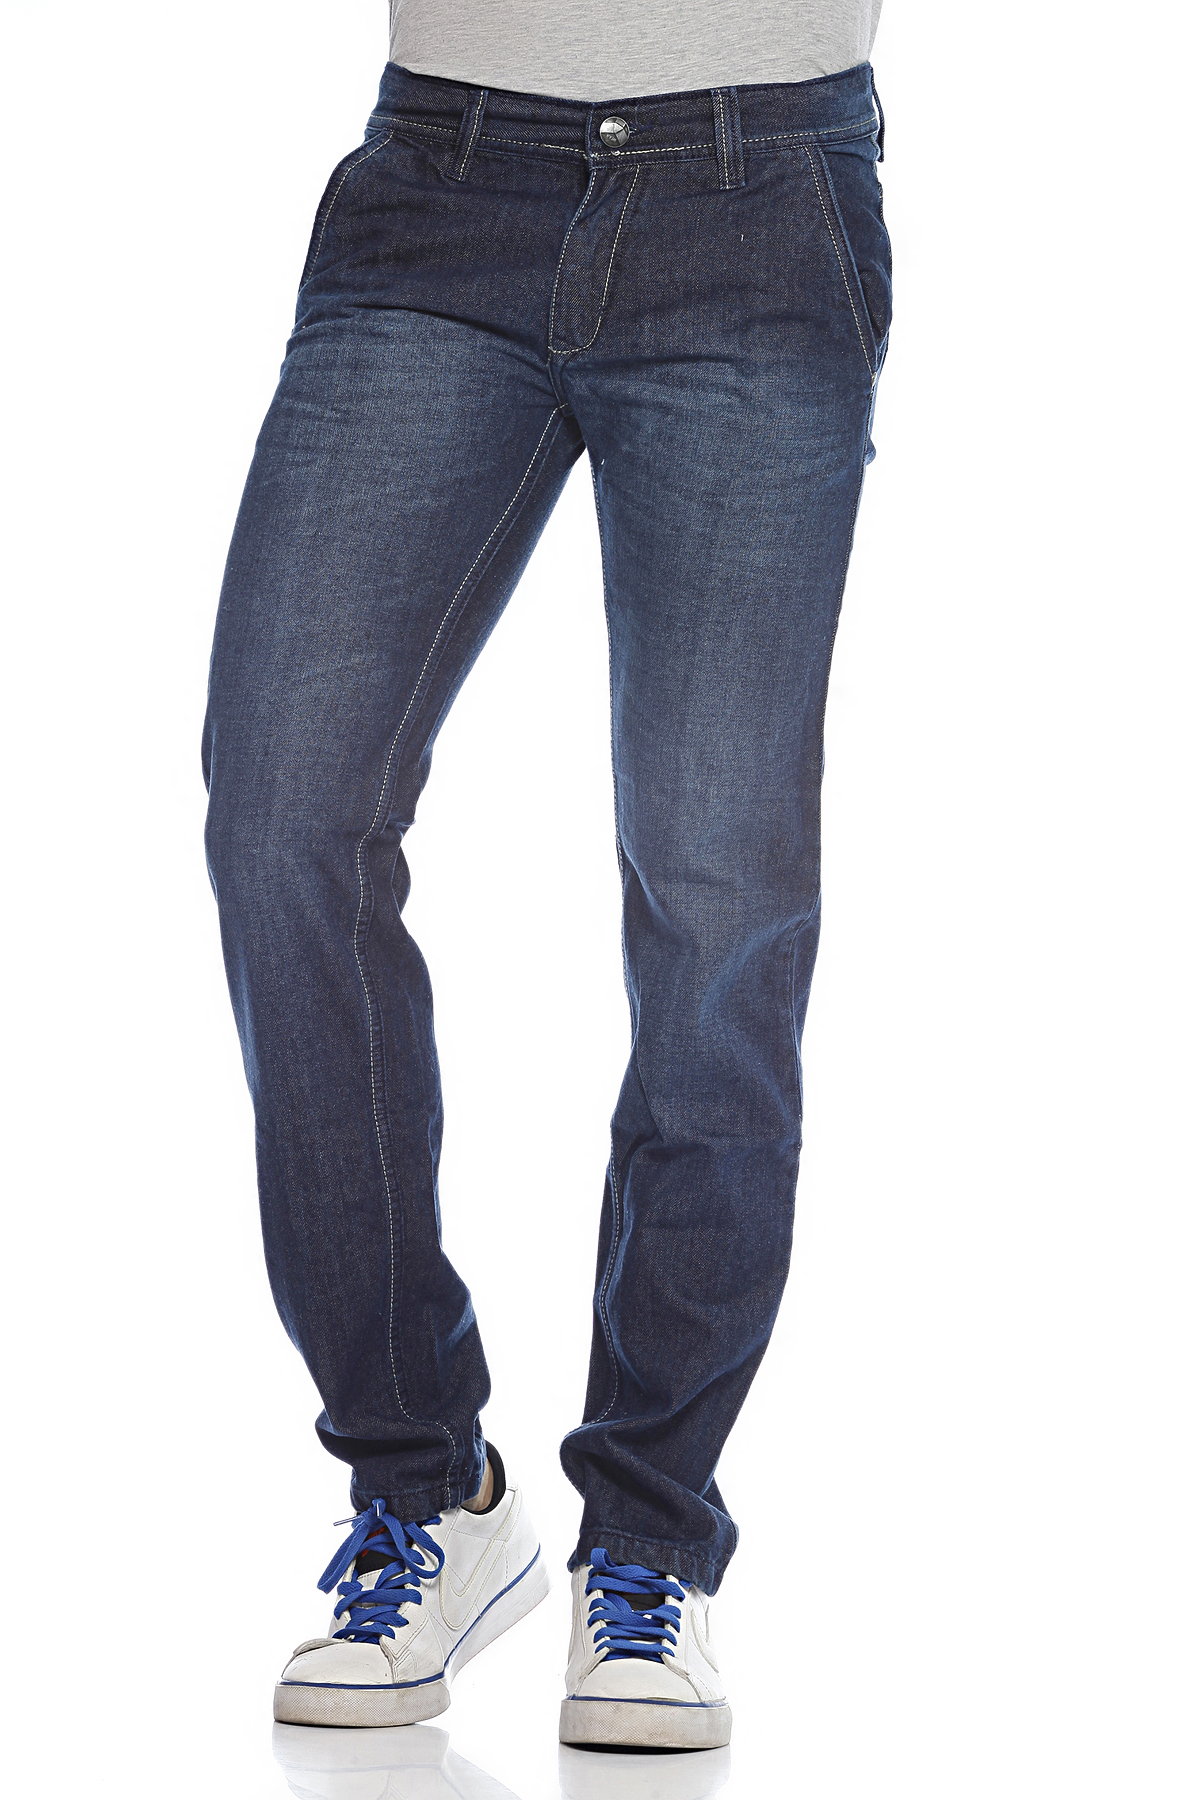 DS black cotton Stylish regular fit jeans at aamnaaya.com